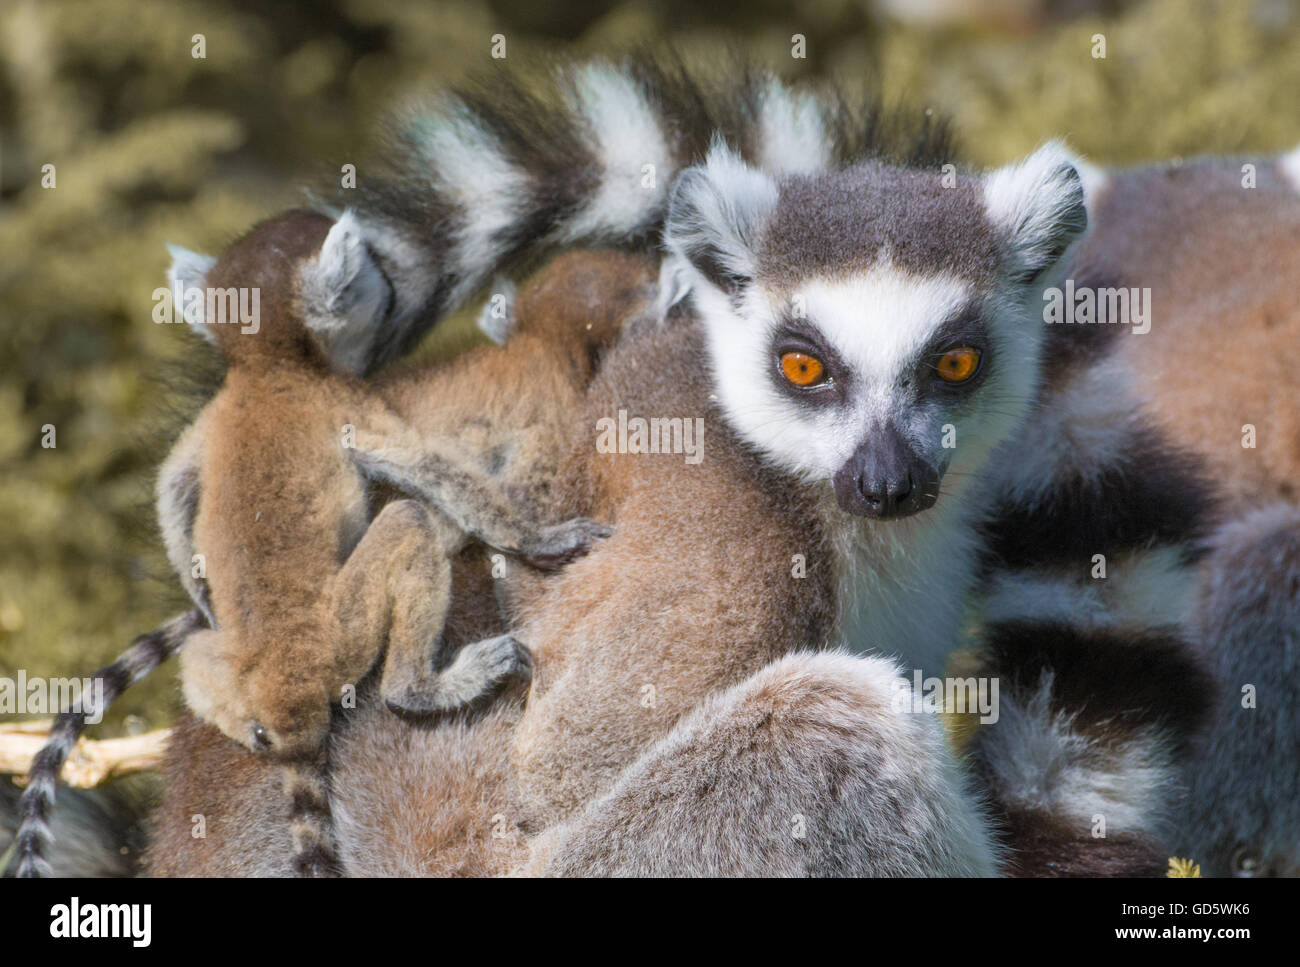 Ring-tailed lemur family Stock Photo - Alamy